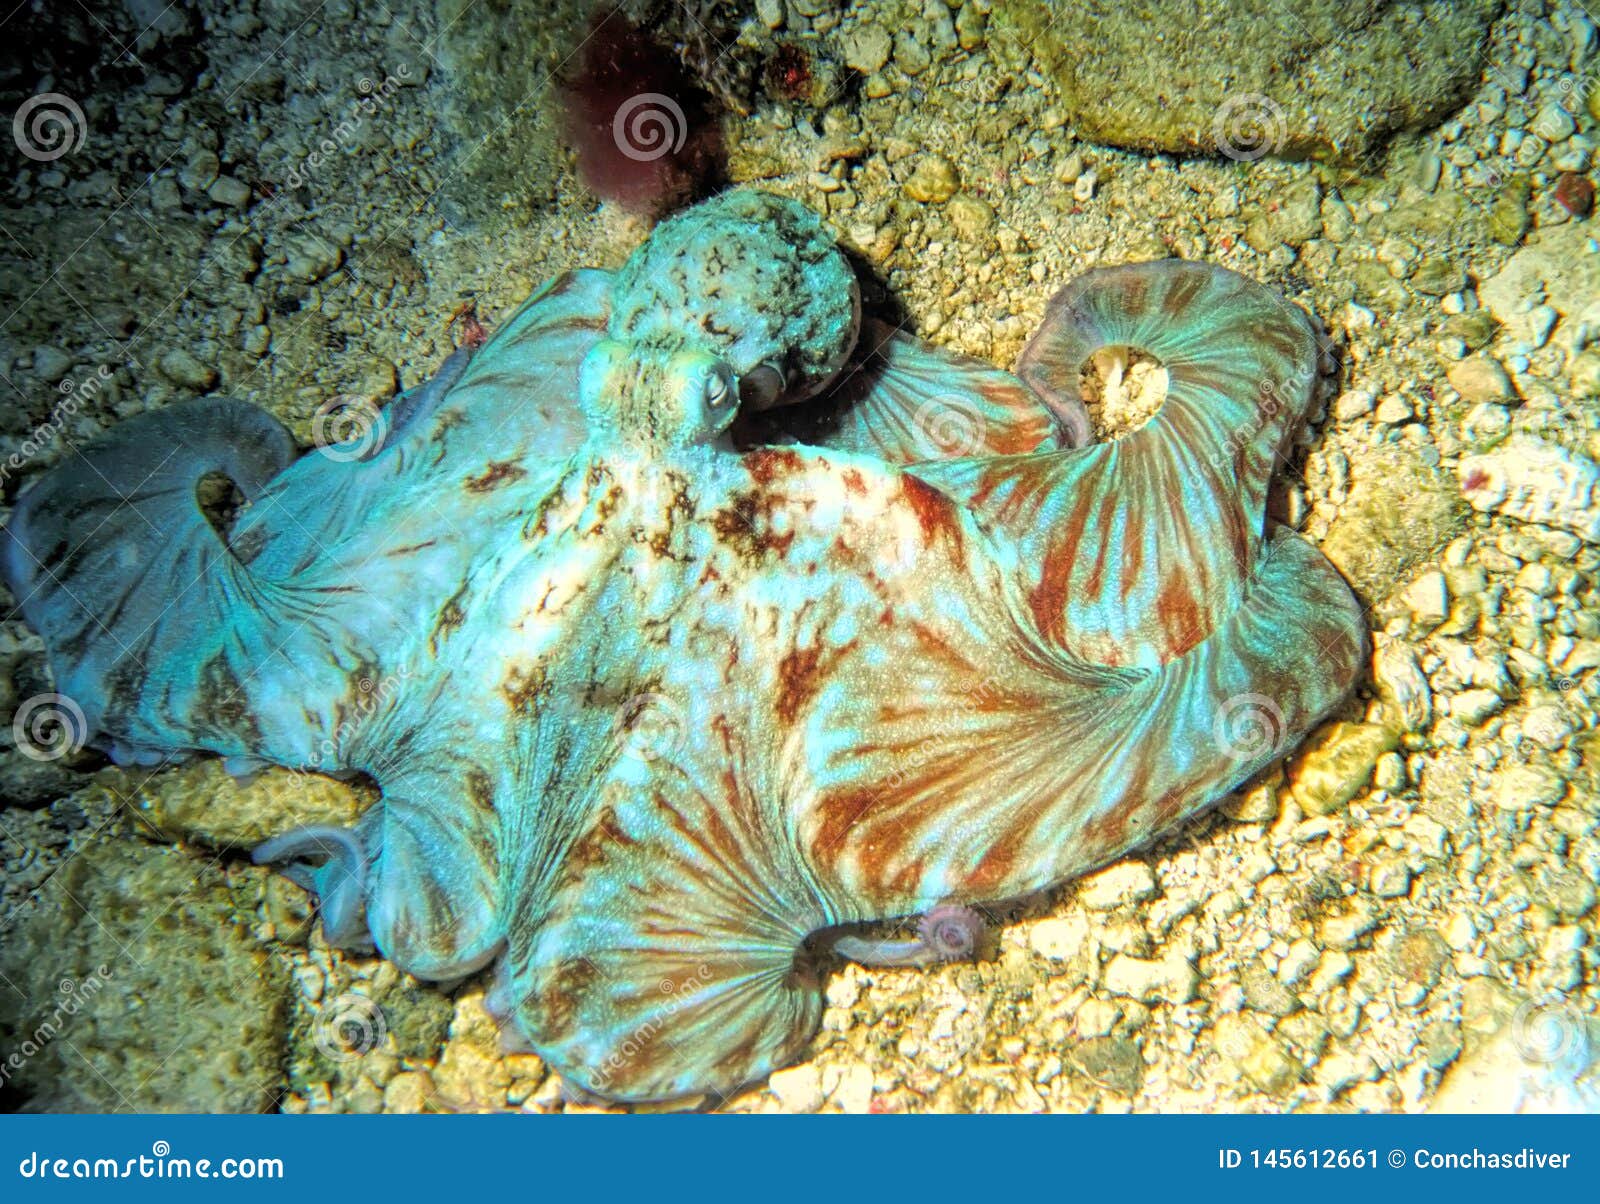 a caribbean reef octopus hunts at night